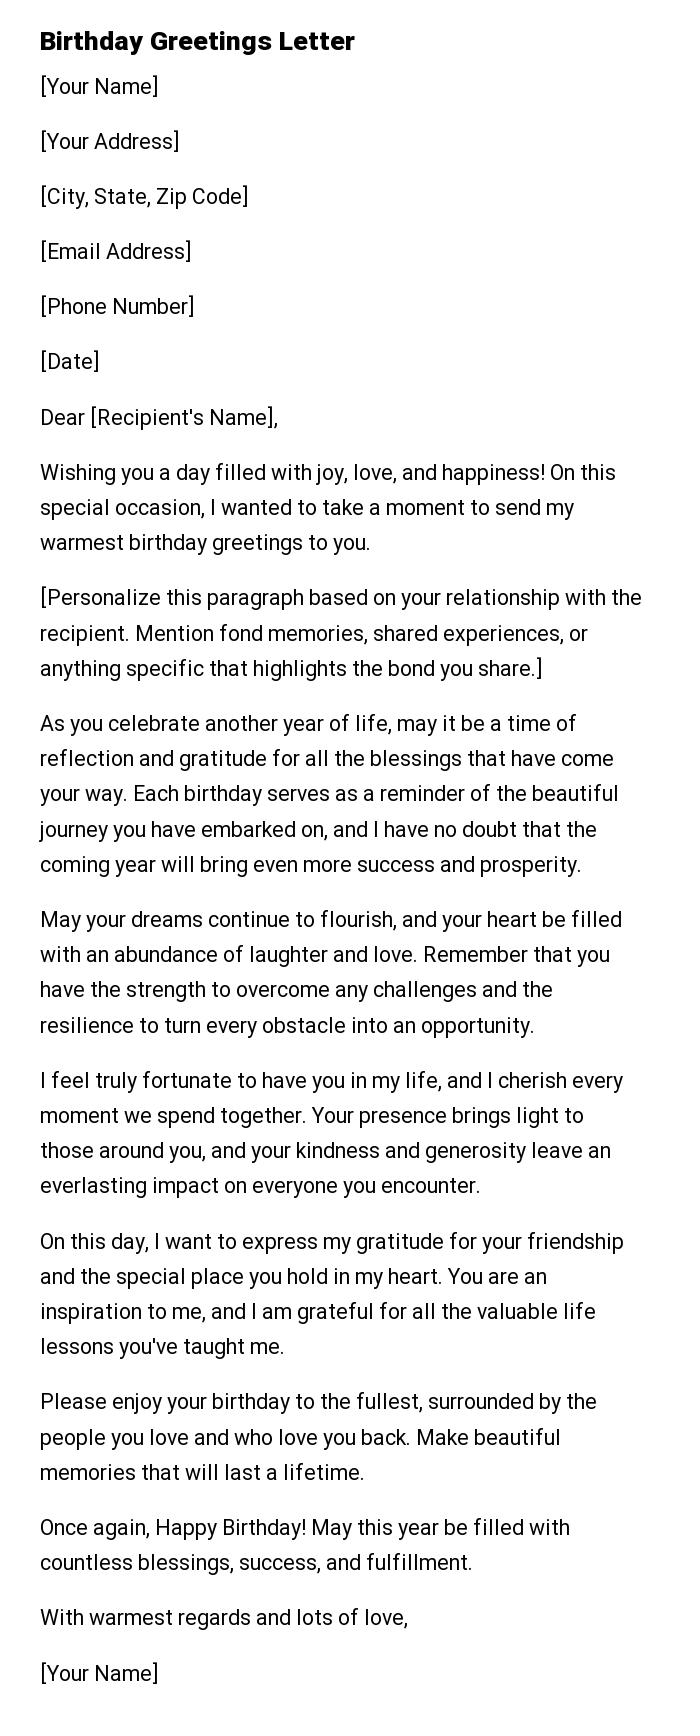 Birthday Greetings Letter